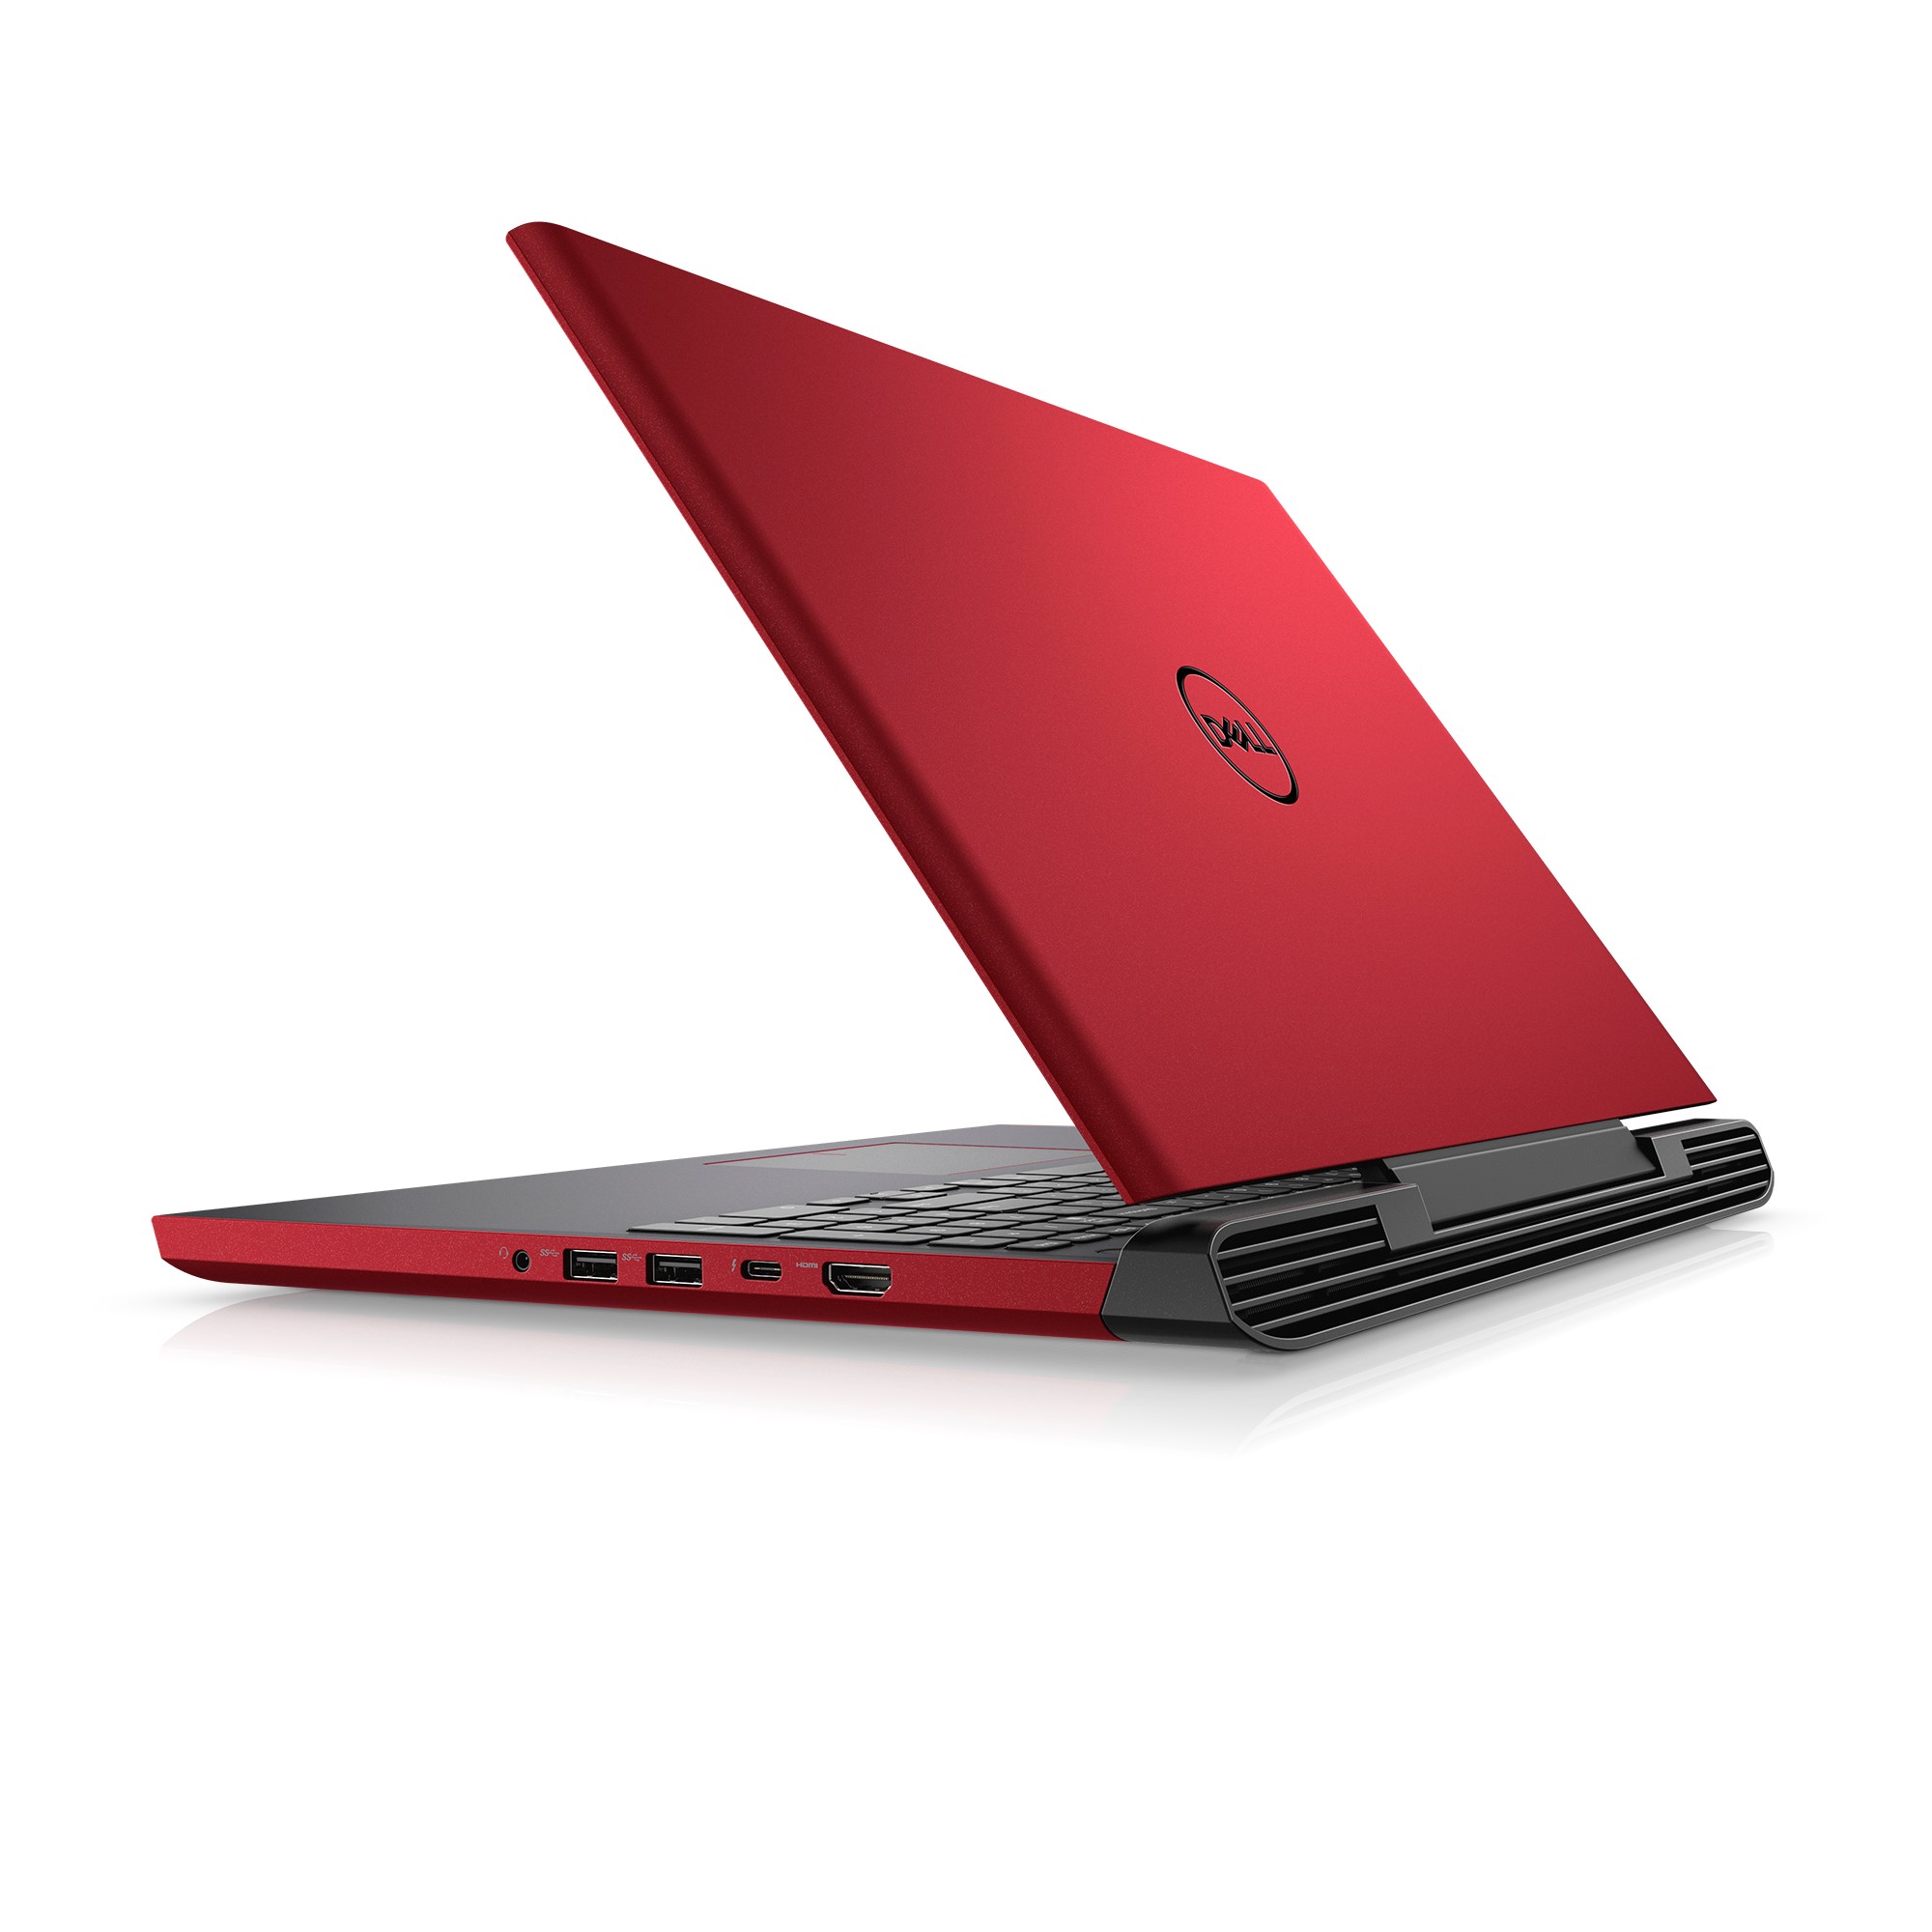 Dell G5 Gaming Laptop 15.6" Full HD, Intel Core i7-8750H, NVIDIA GeForce GTX 1050 Ti 4GB, 1TB HDD + 128GB SSD Storage, 8GB RAM, G5587-7037RED-PUS - image 2 of 6